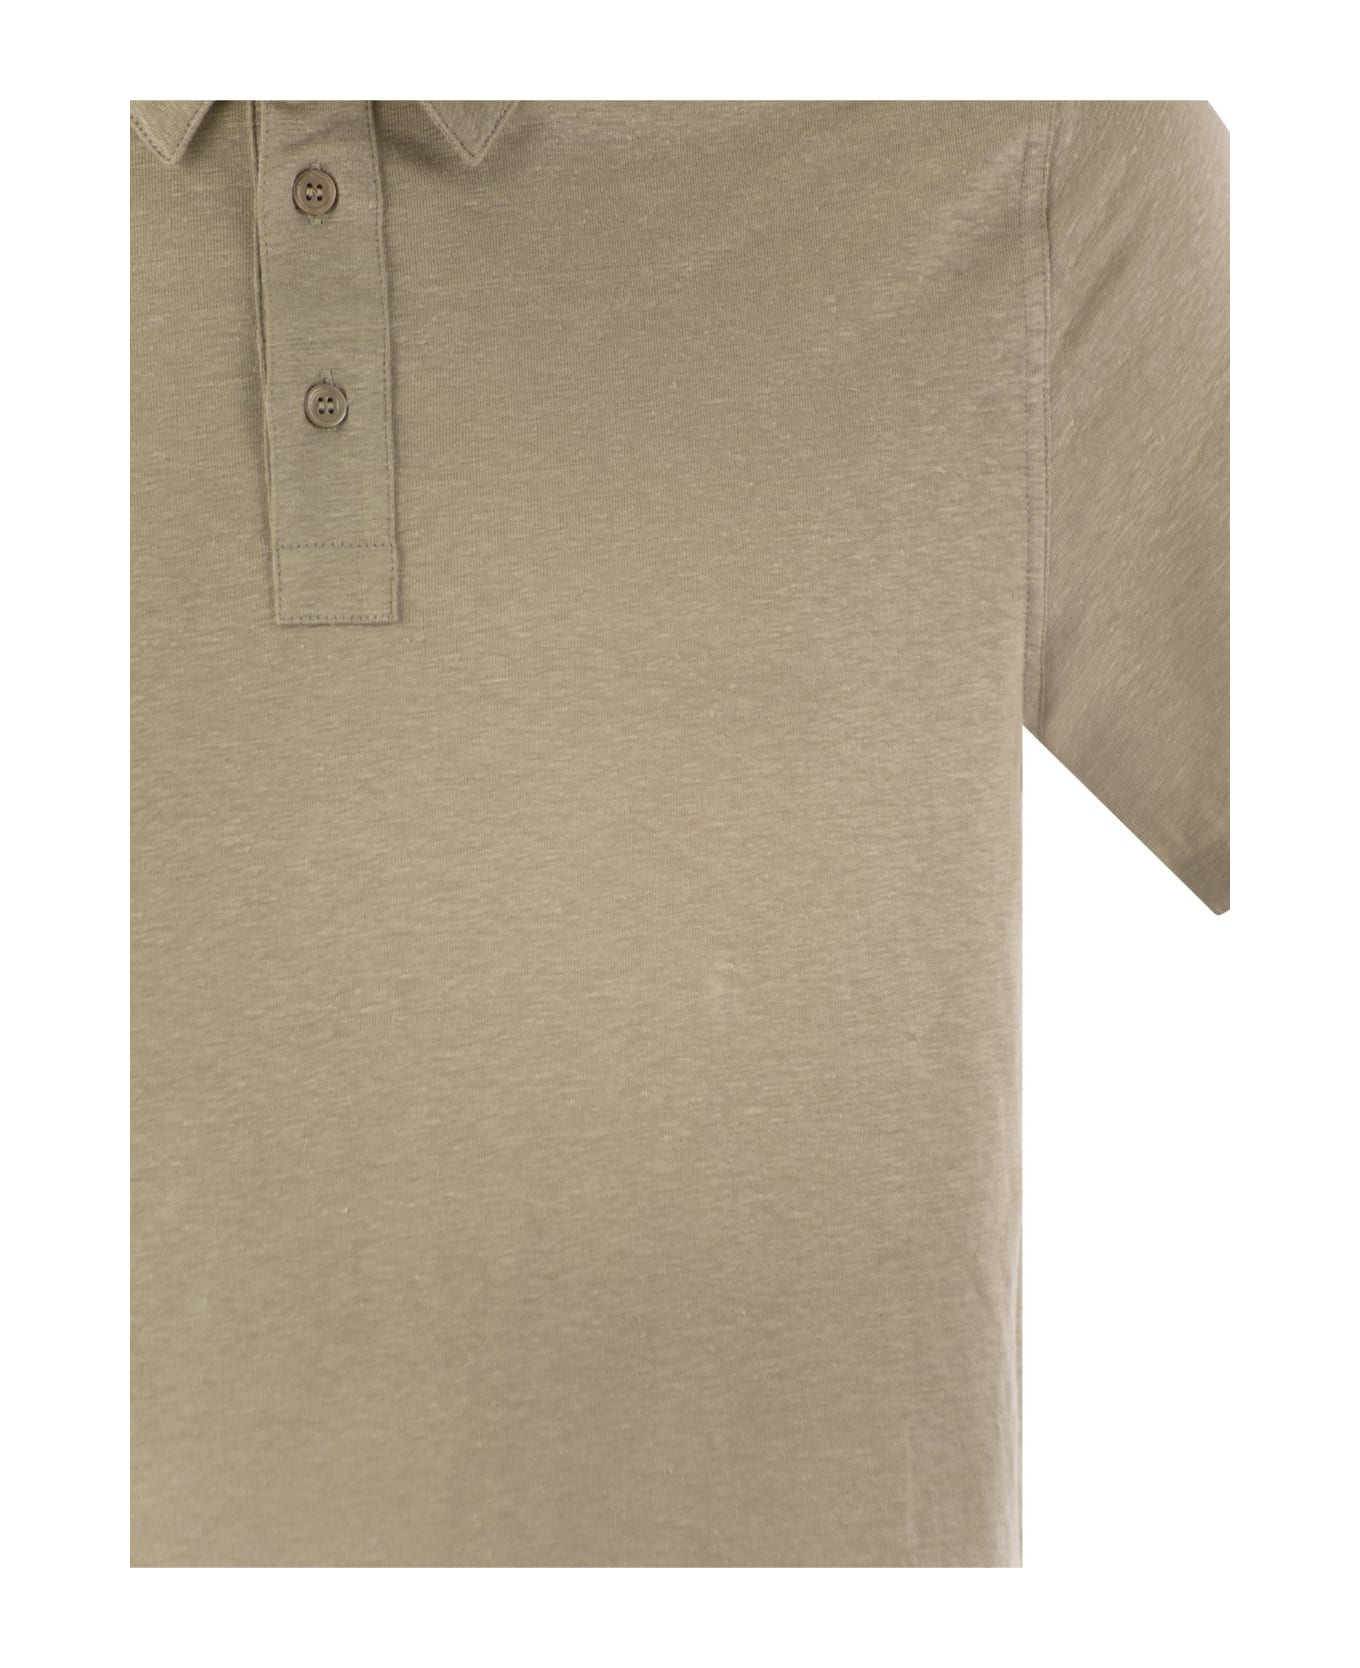 Majestic Filatures Linen Short-sleeved Polo Shirt - Sand ポロシャツ